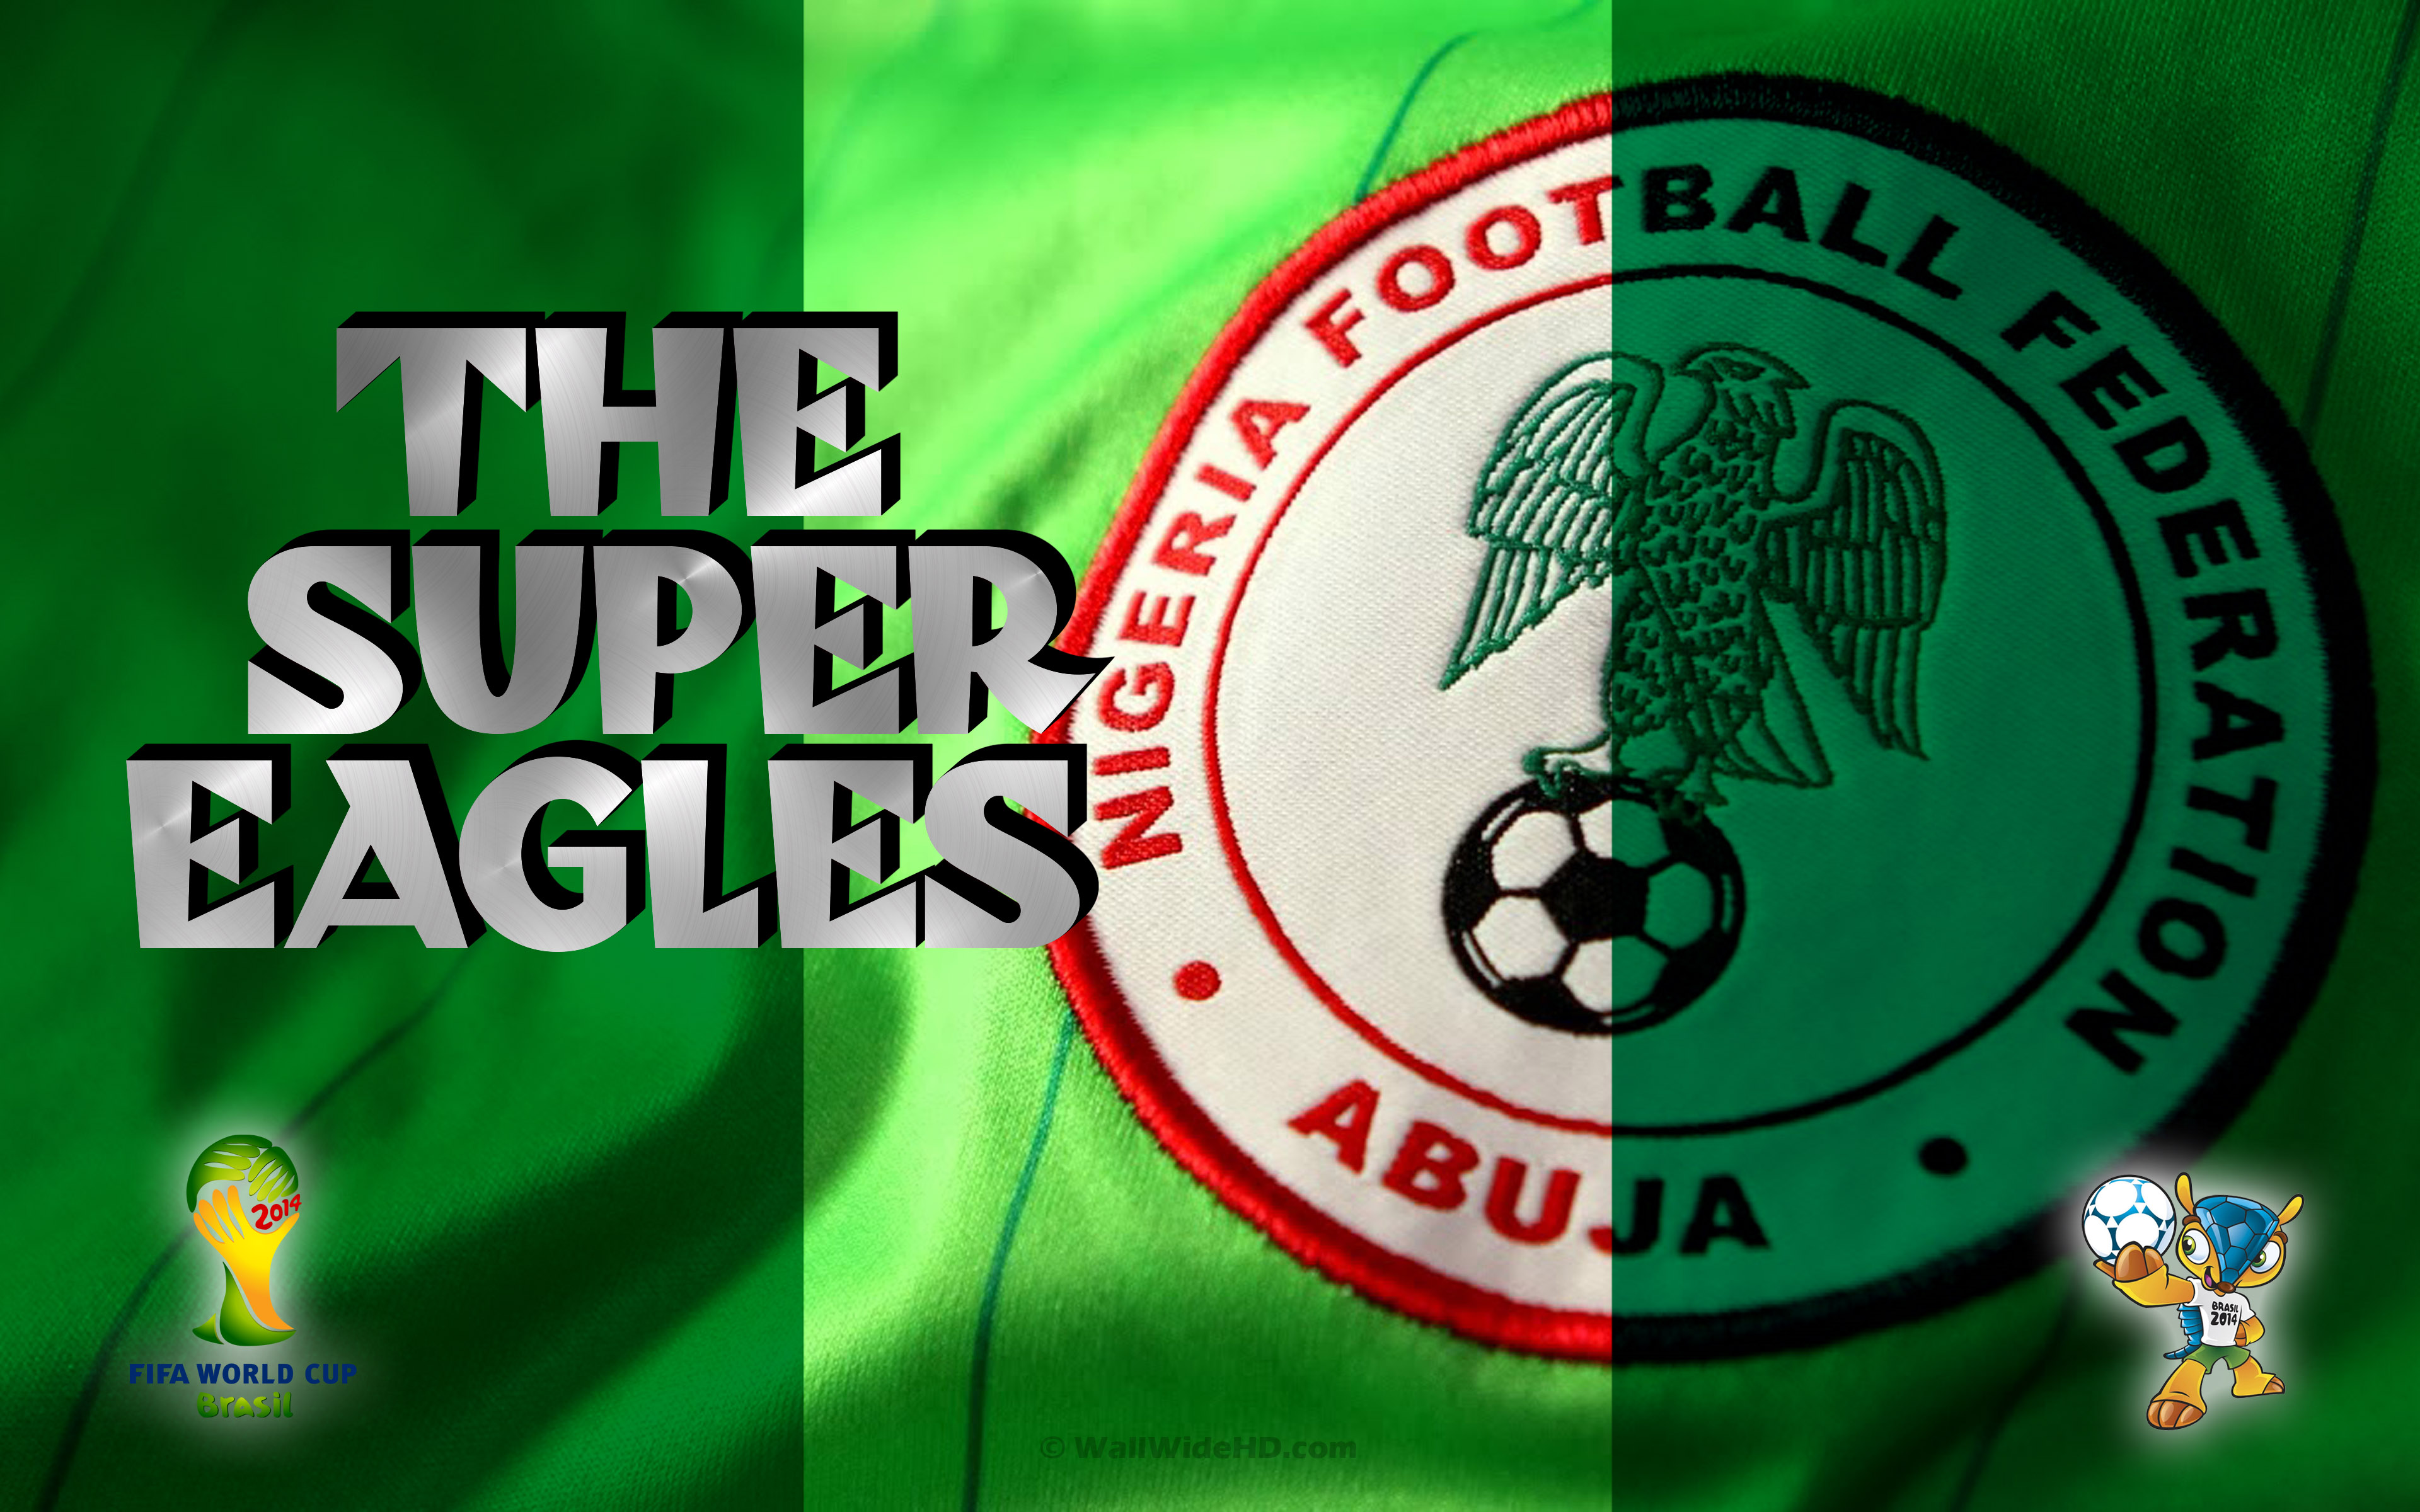 Nigeria 2014 World Cup